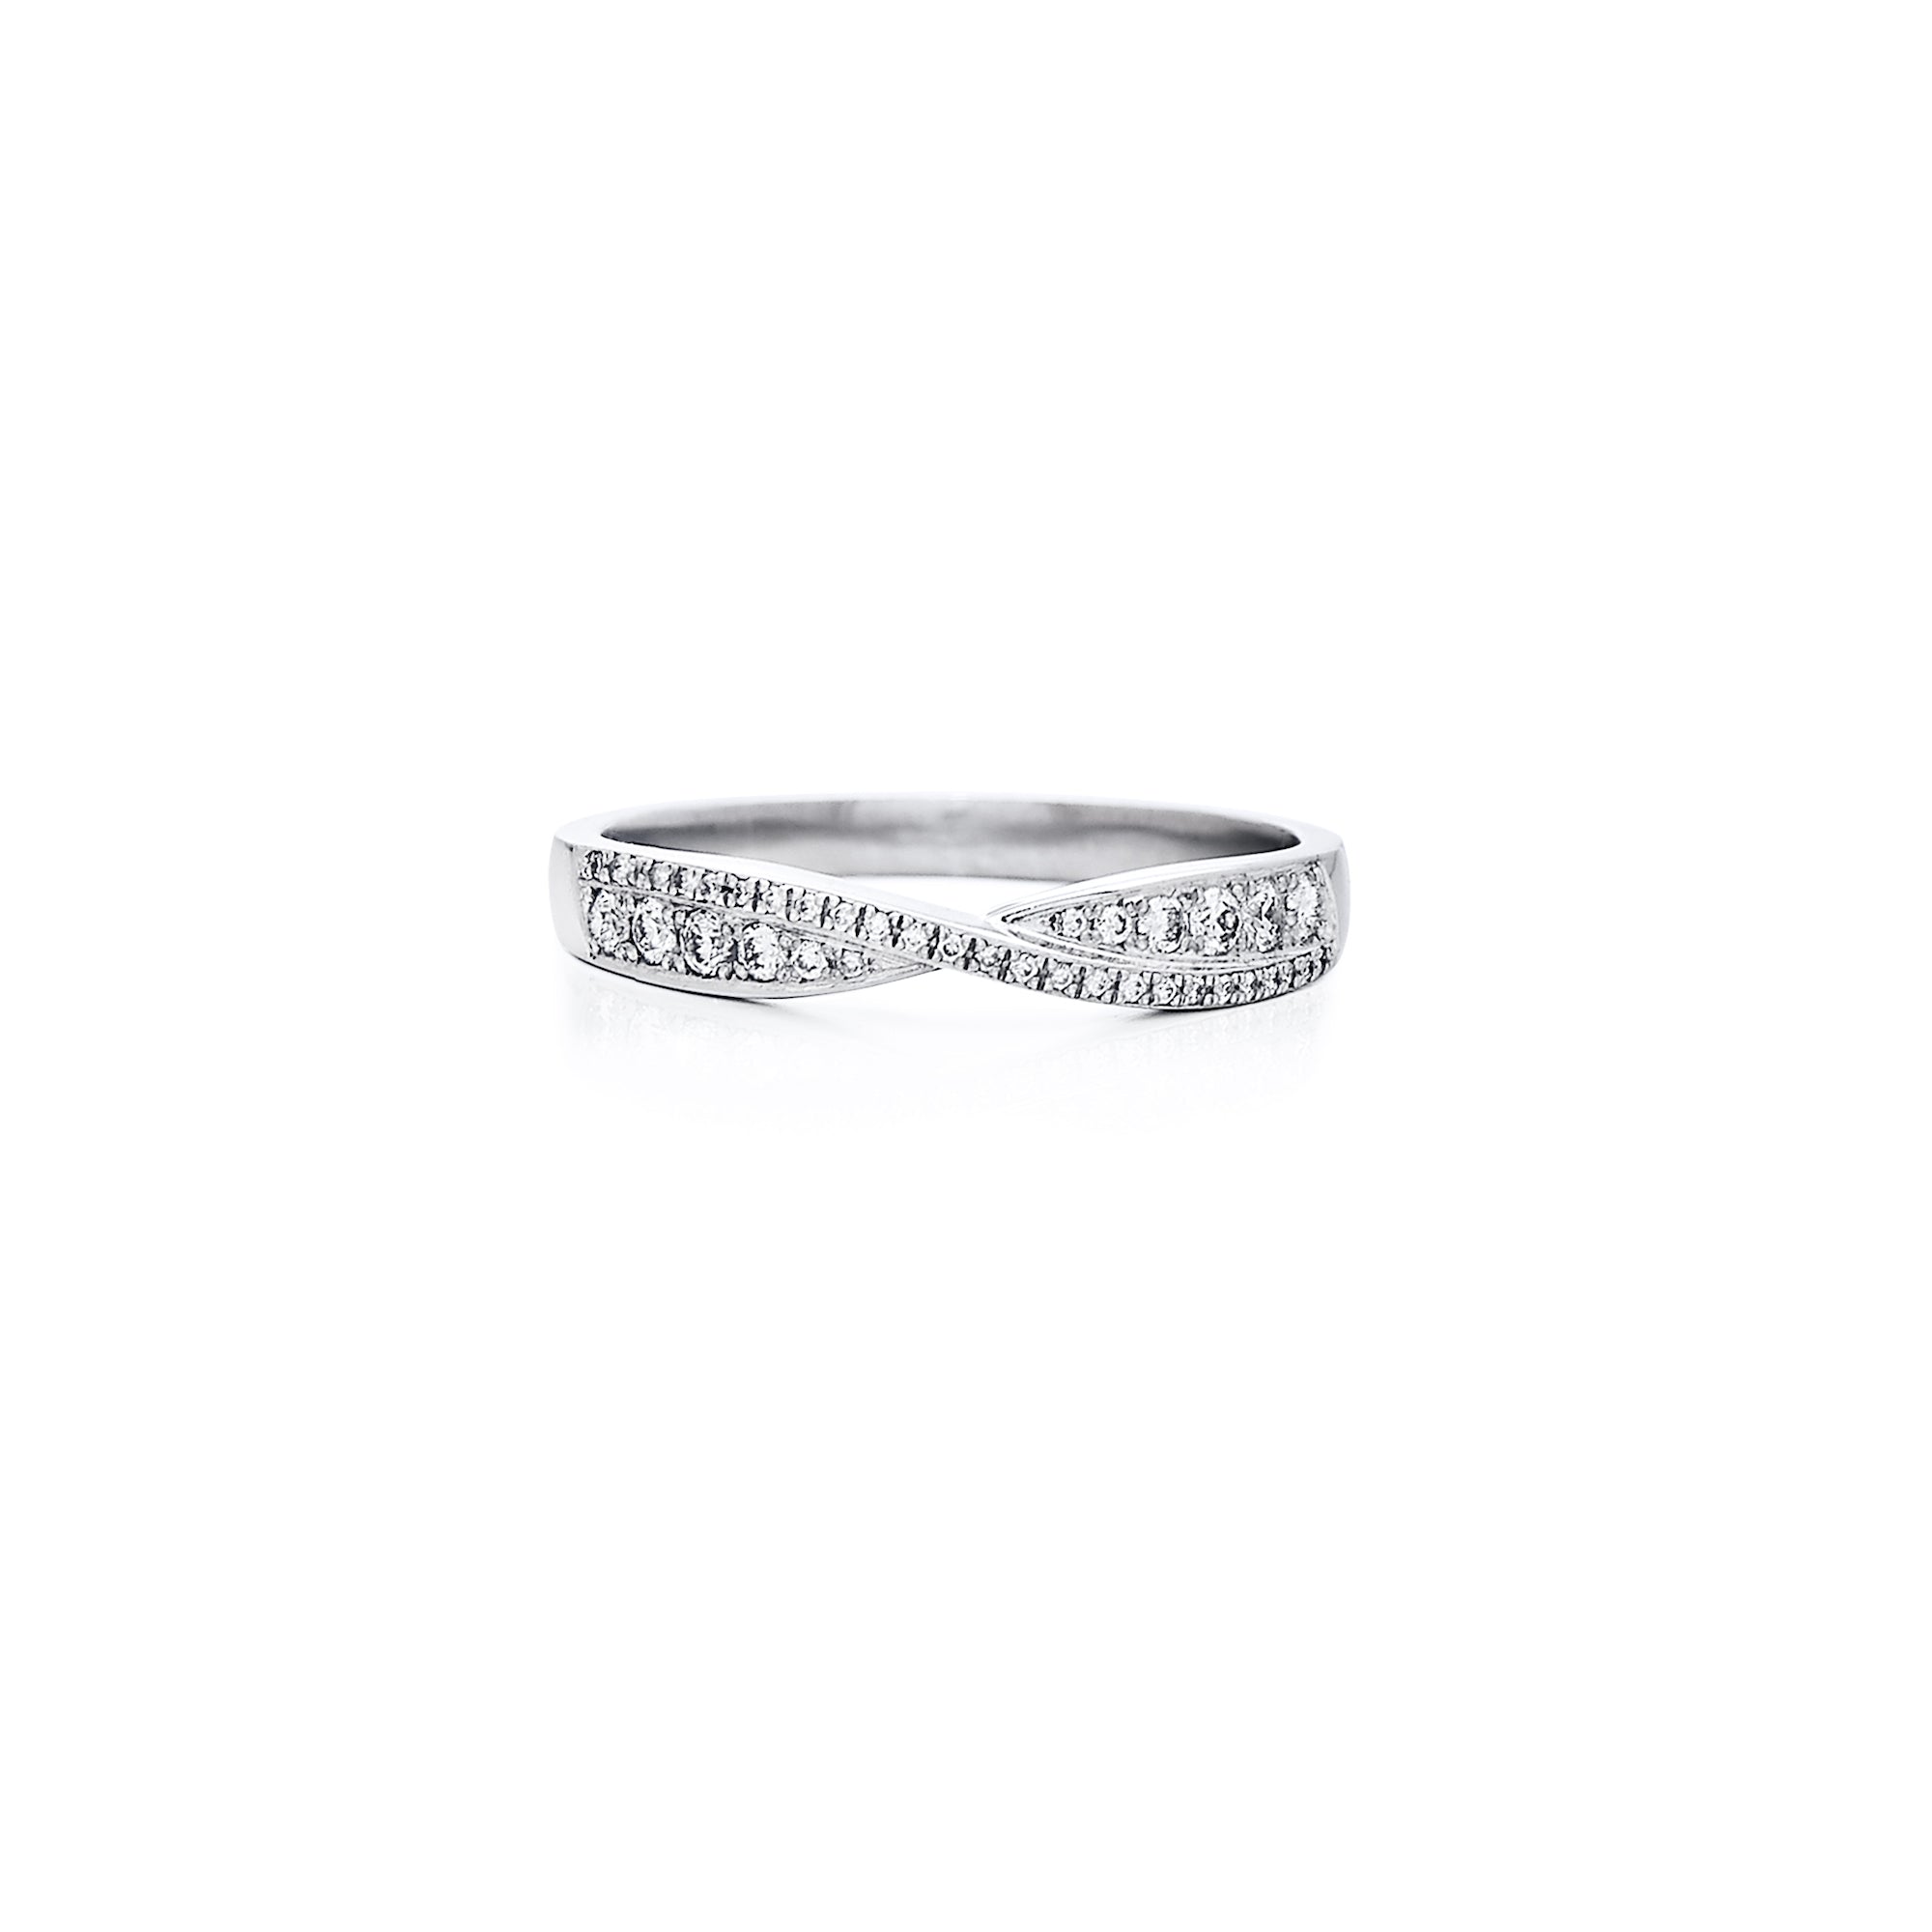 Wedding rings Birmingham designed by Mitchel & Co